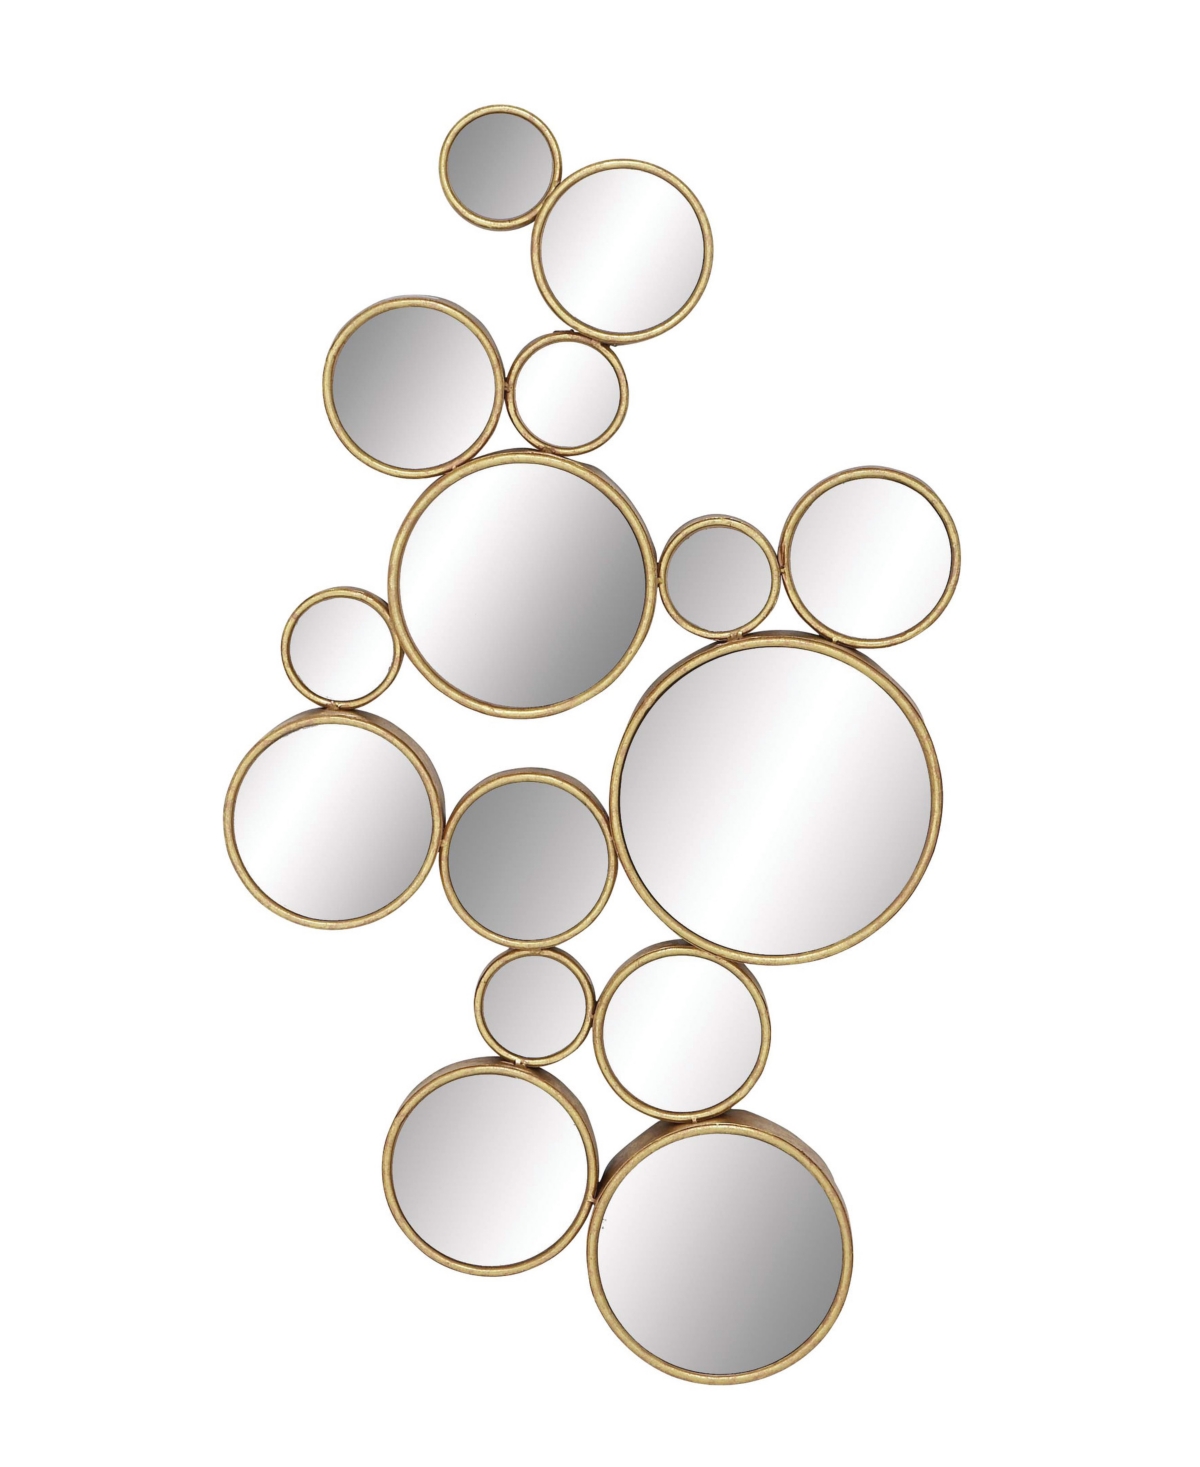 by Cosmopolitan Gold Contemporary Metal Wall Mirror, 40 x 22 - Gold-Tone